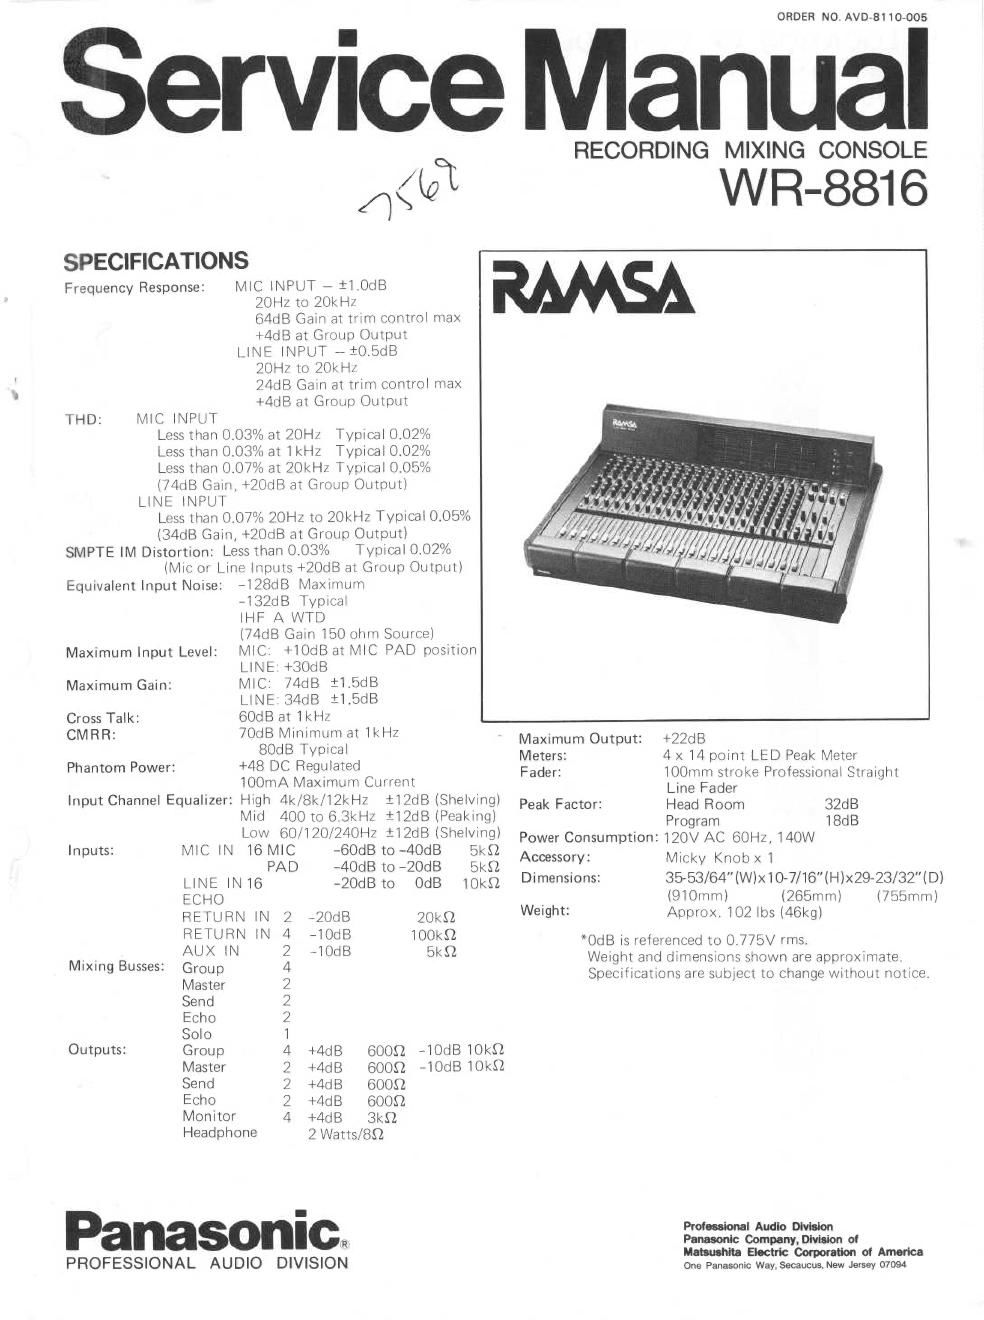 panasonic wr 8816 ramsa service manual